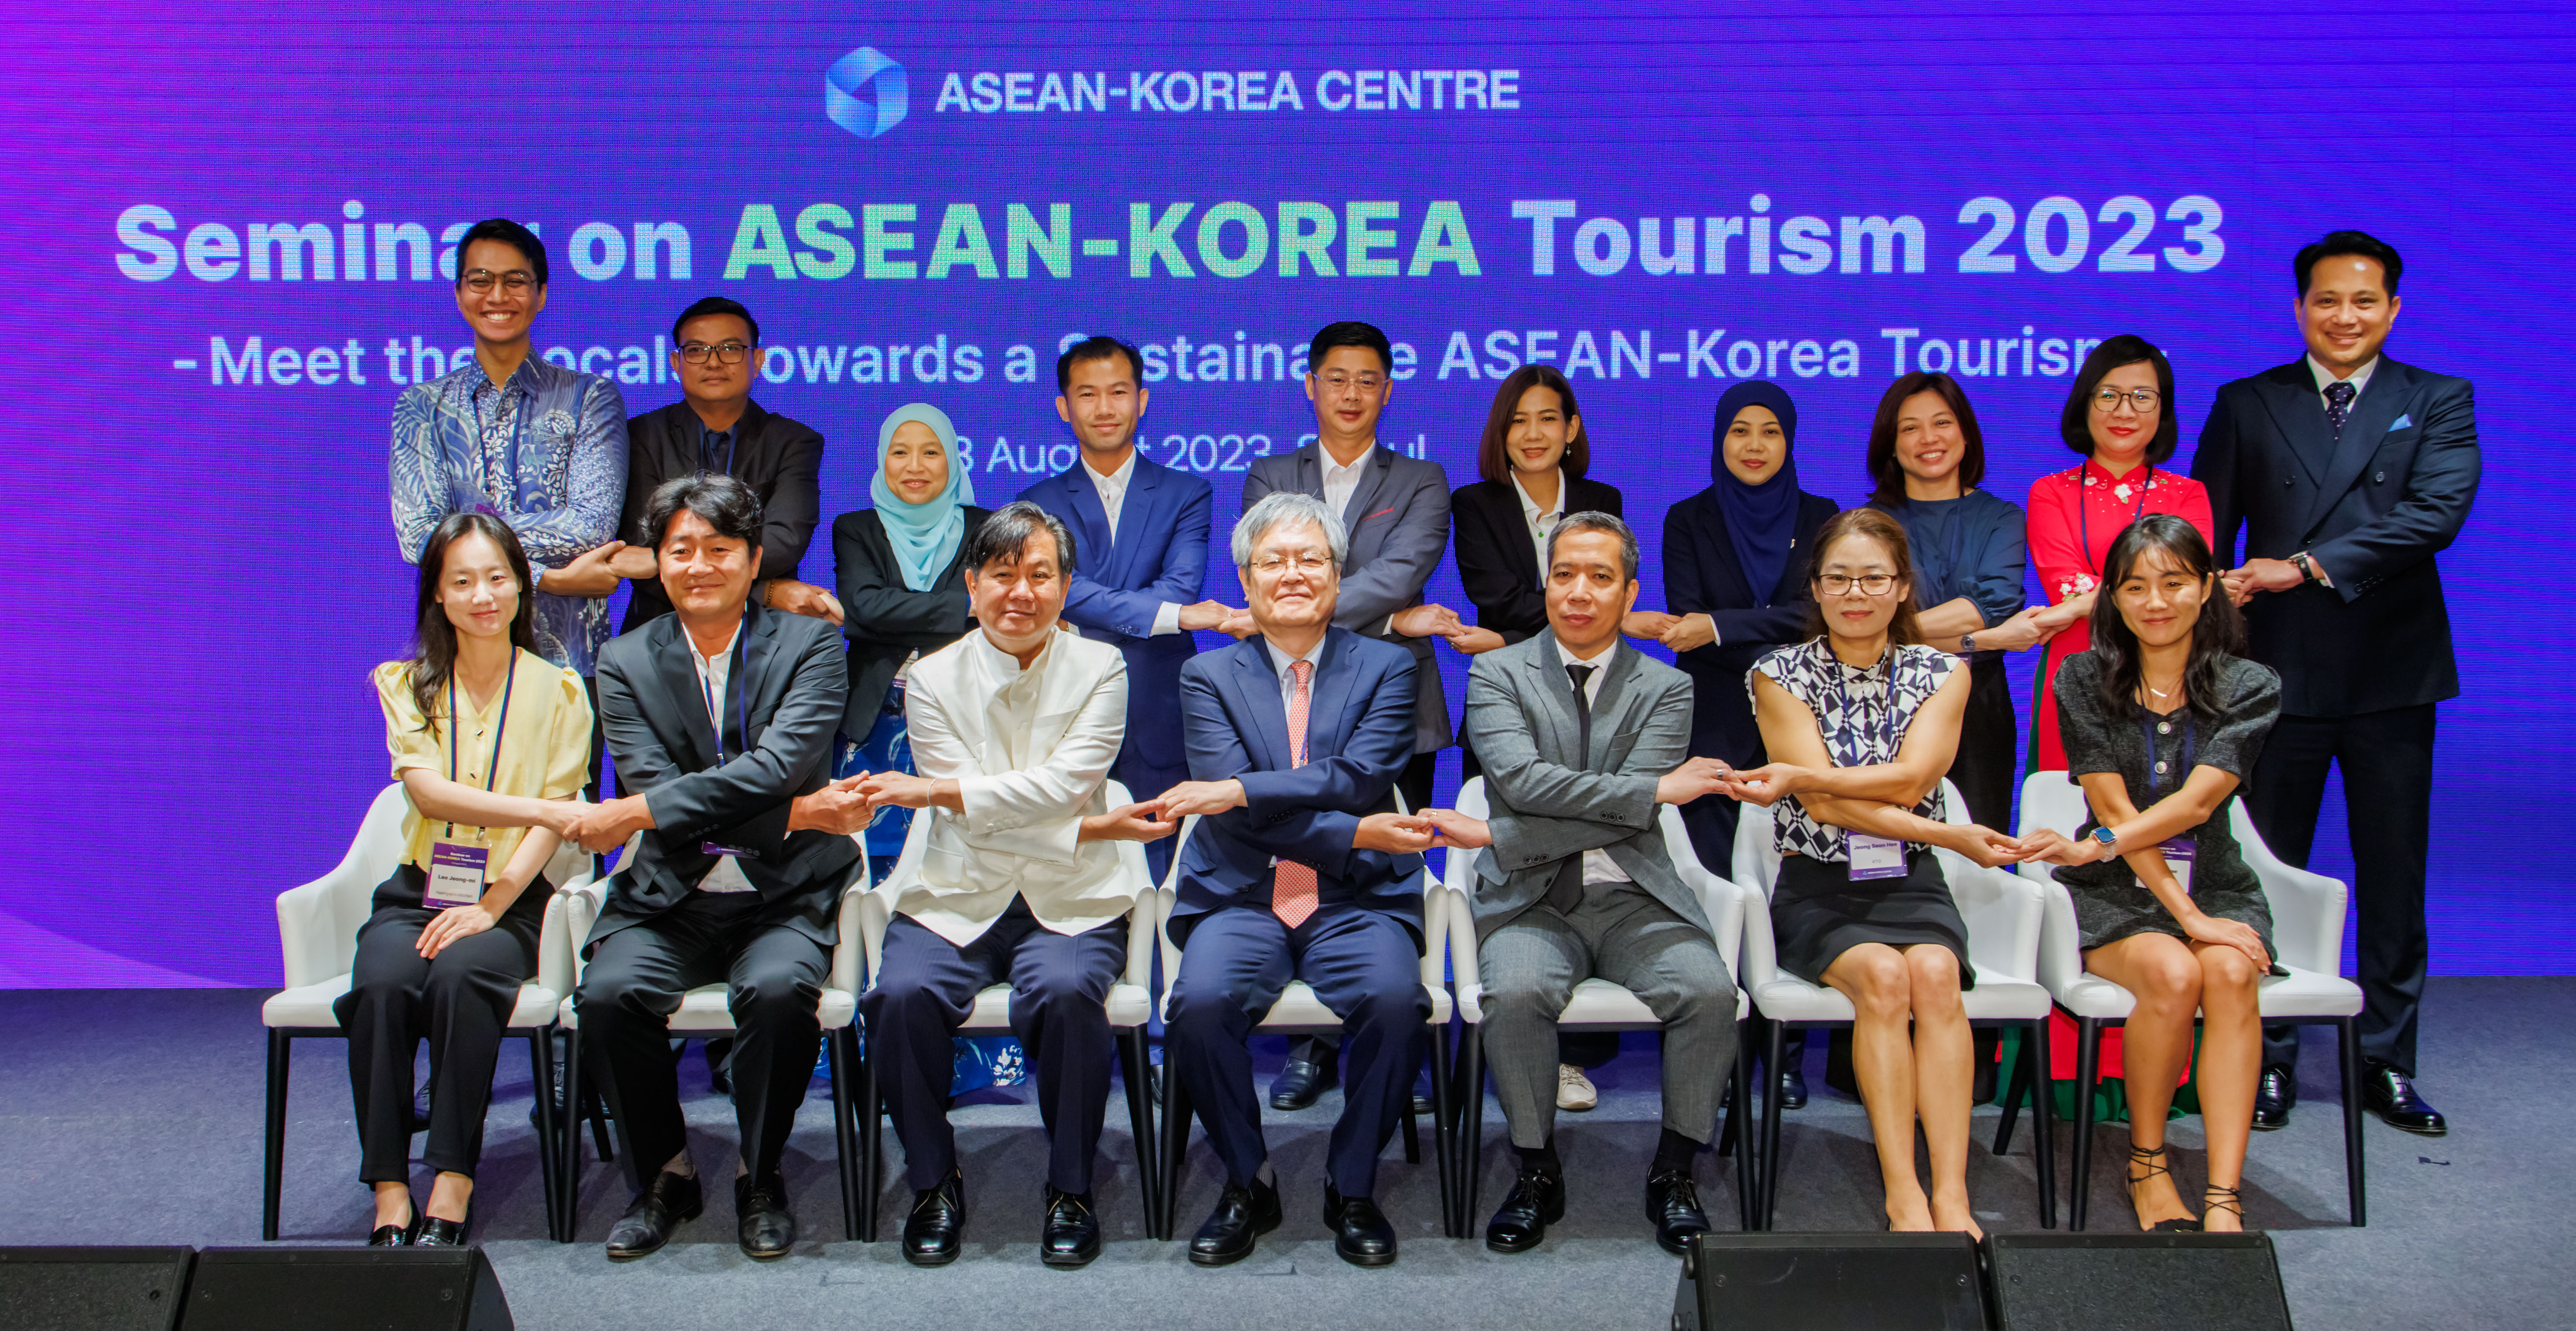 Seminar on A-K Tourism 2023 (Group photo)